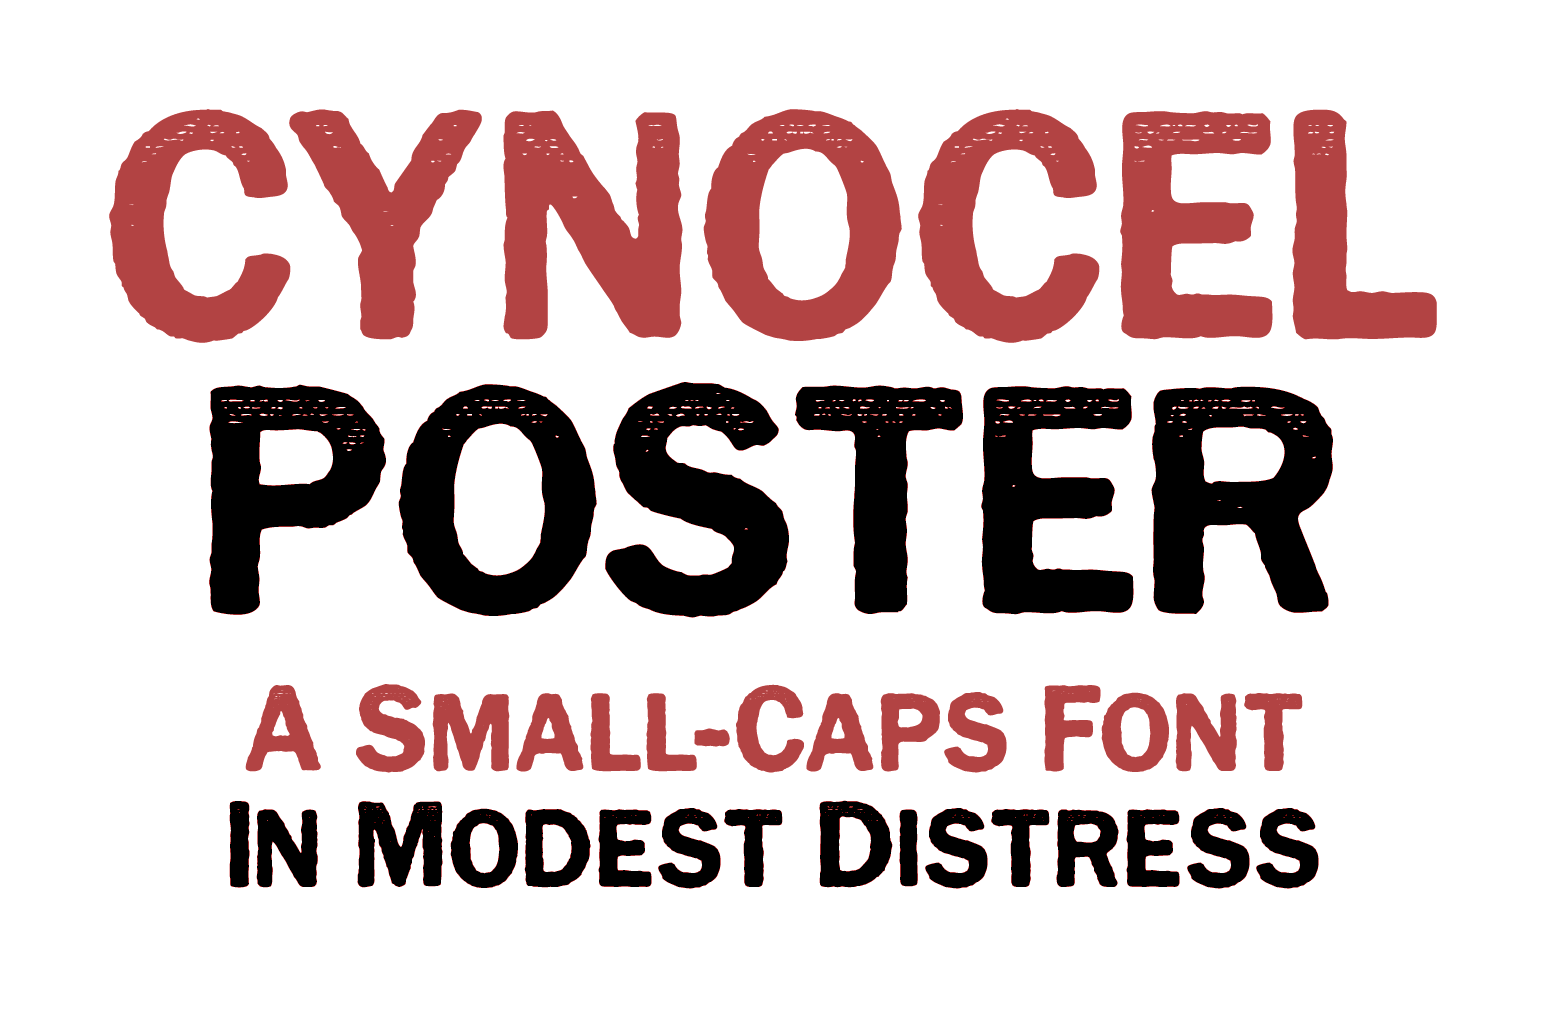 Cynocel Poster